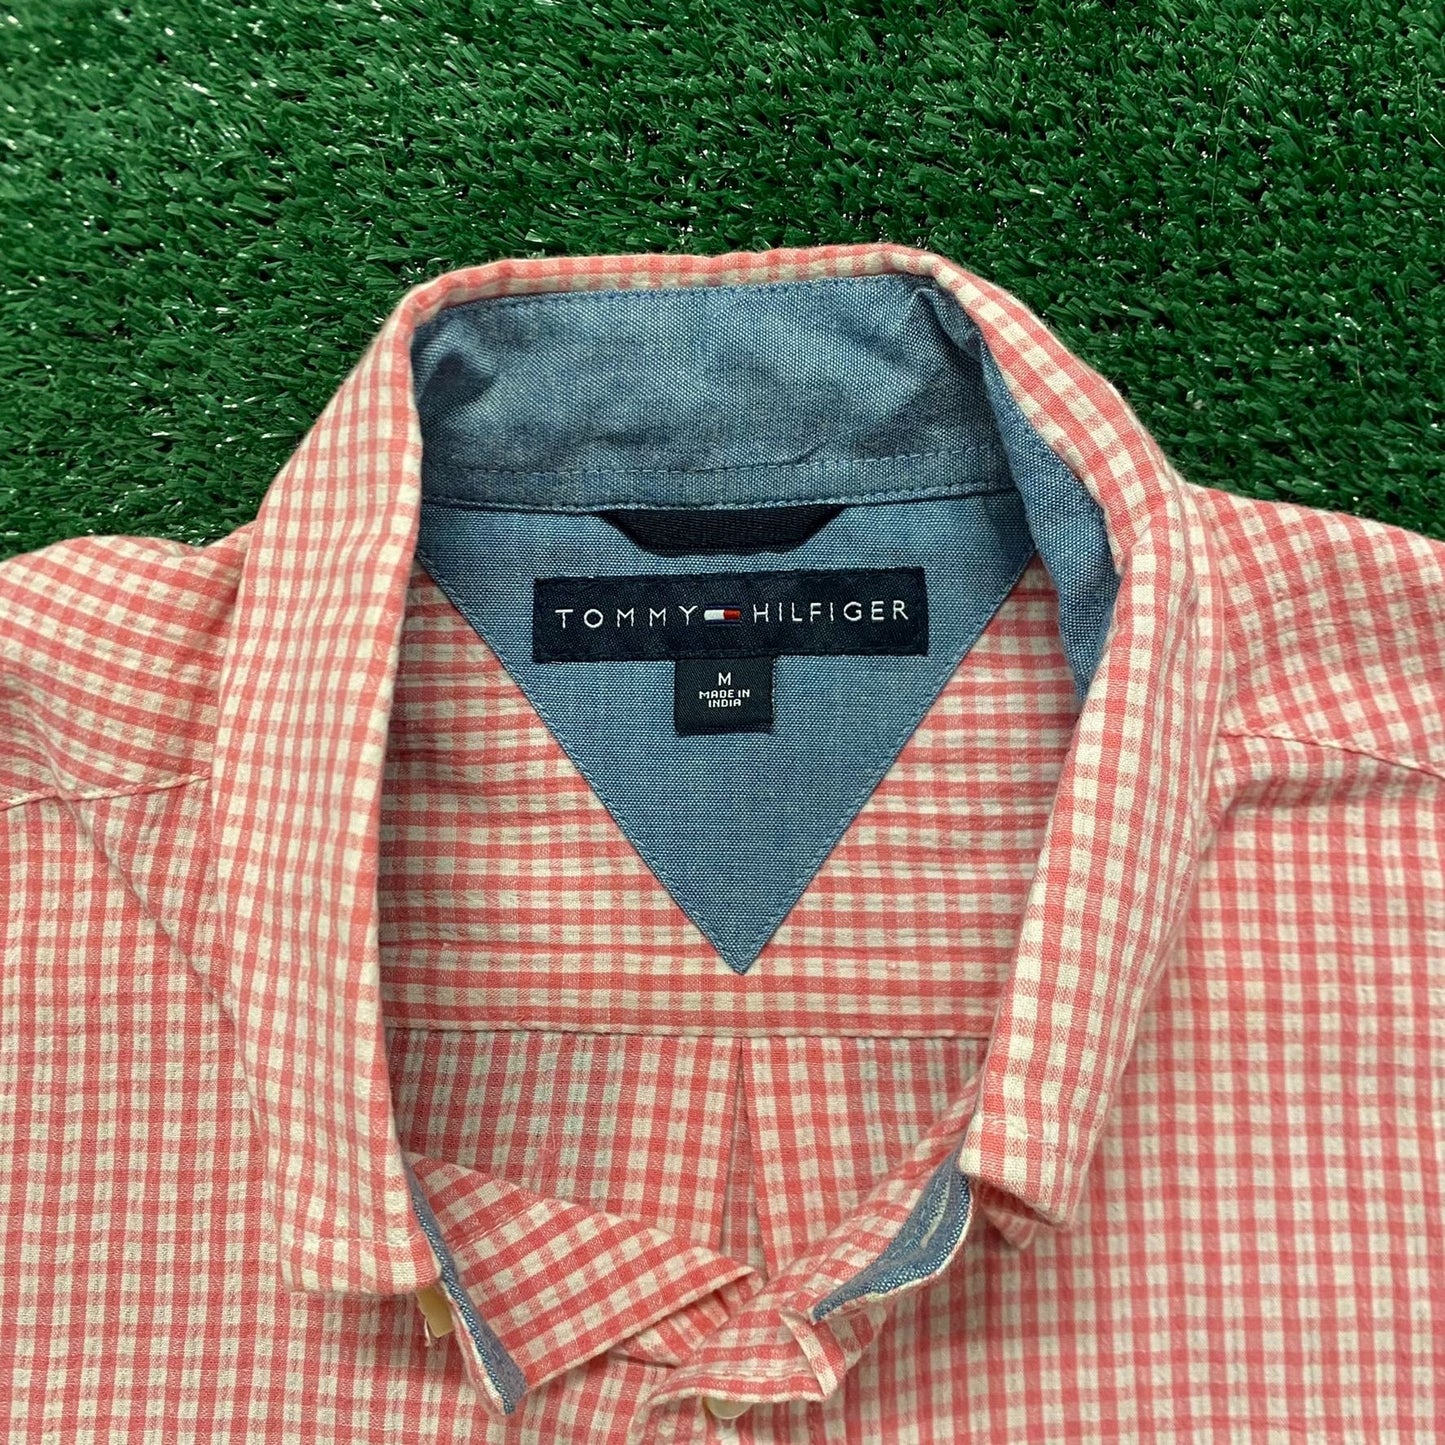 Pink Gingham Plaid Checks Vintage Preppy Button Up Shirt